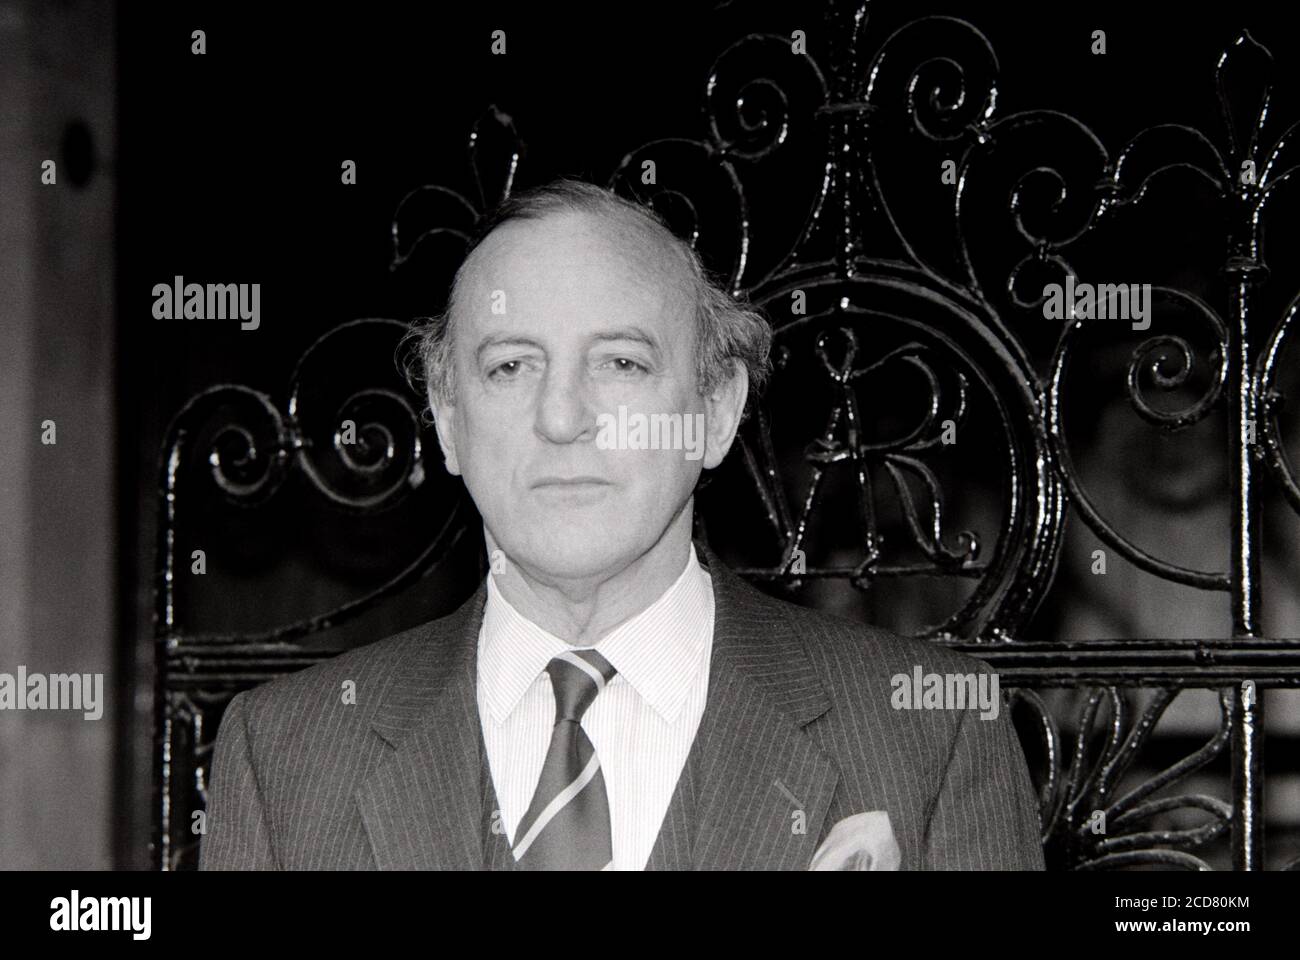 Lord Justice Taylor, Vorsitzender der Hillsborough Inquiry, nimmt an einer Fotozelle am Royal Courts of Justice, London, Teil. 17. April 1989. Foto: Neil Turner Stockfoto